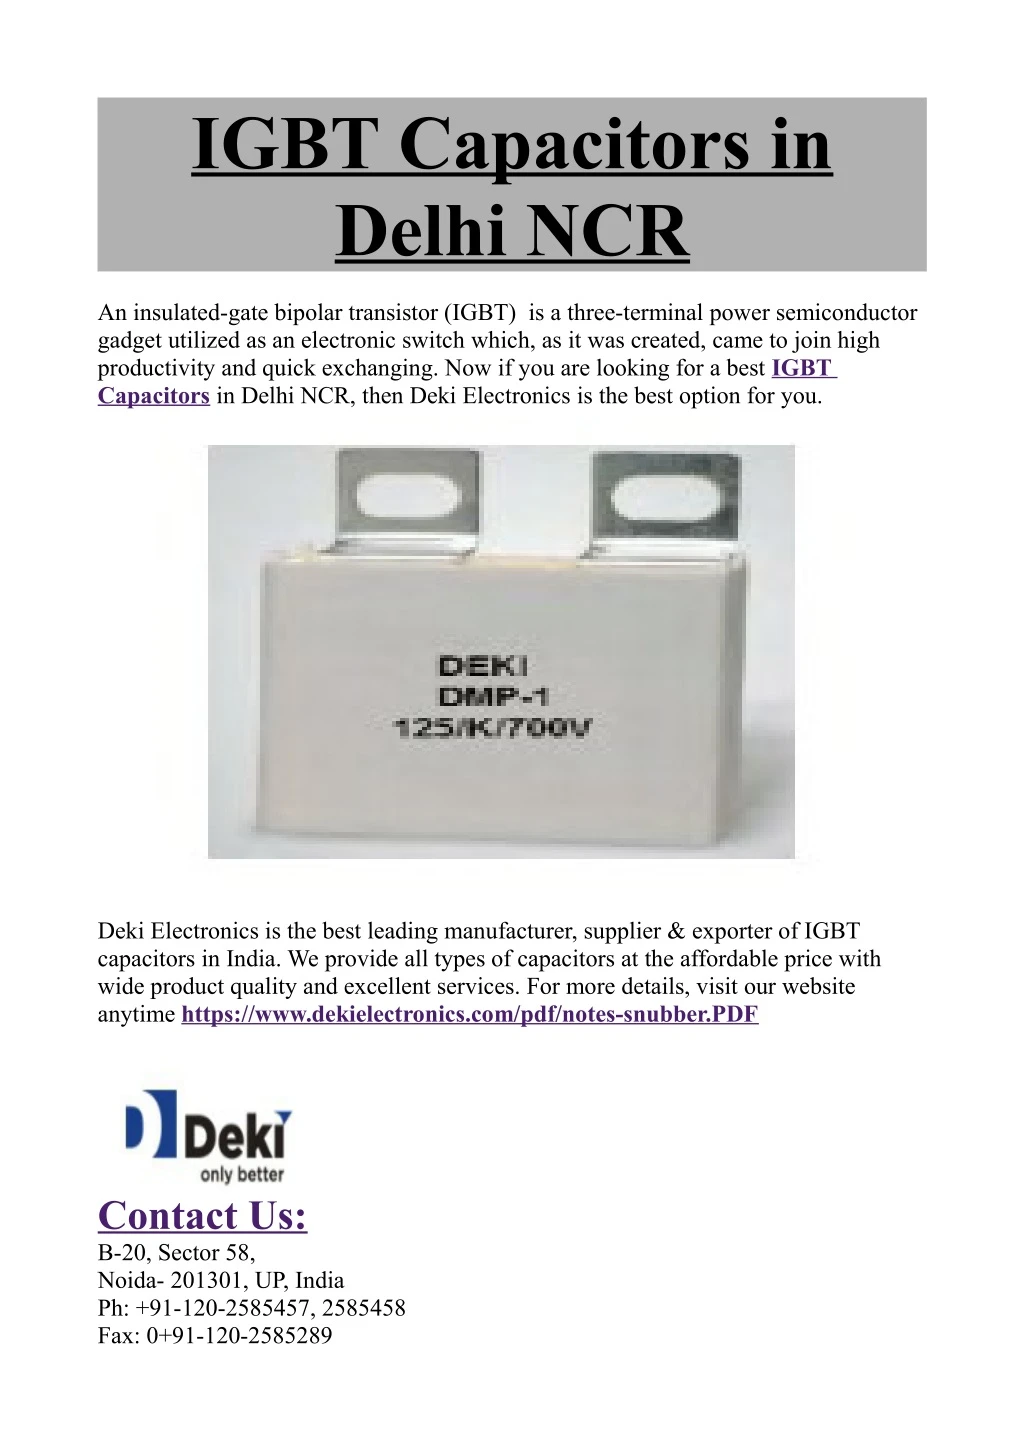 igbt capacitors in delhi ncr